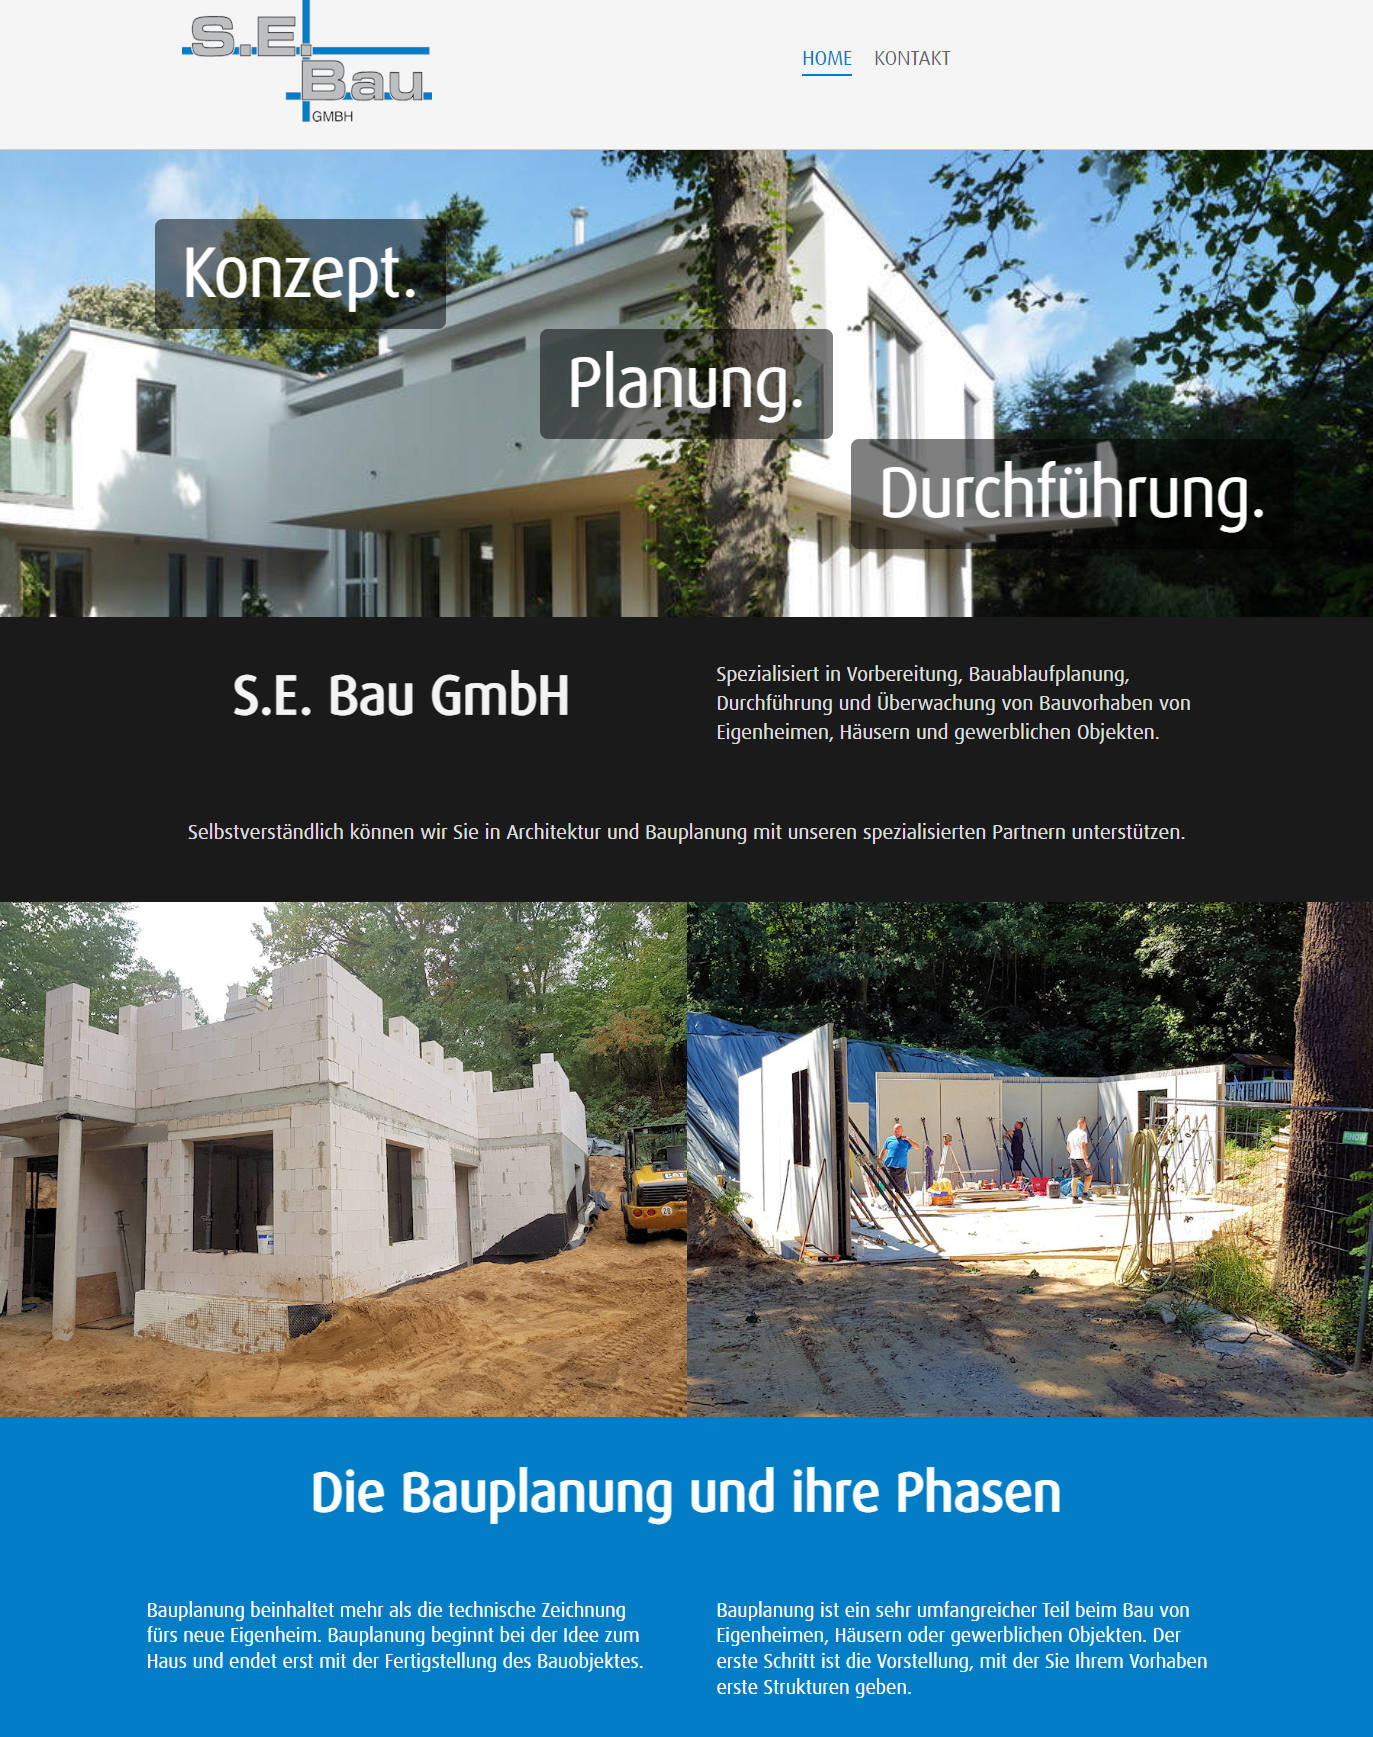 Bauunternehmen S.E. Bau GmbH, Sven Erstling, Berlin-Glienicke